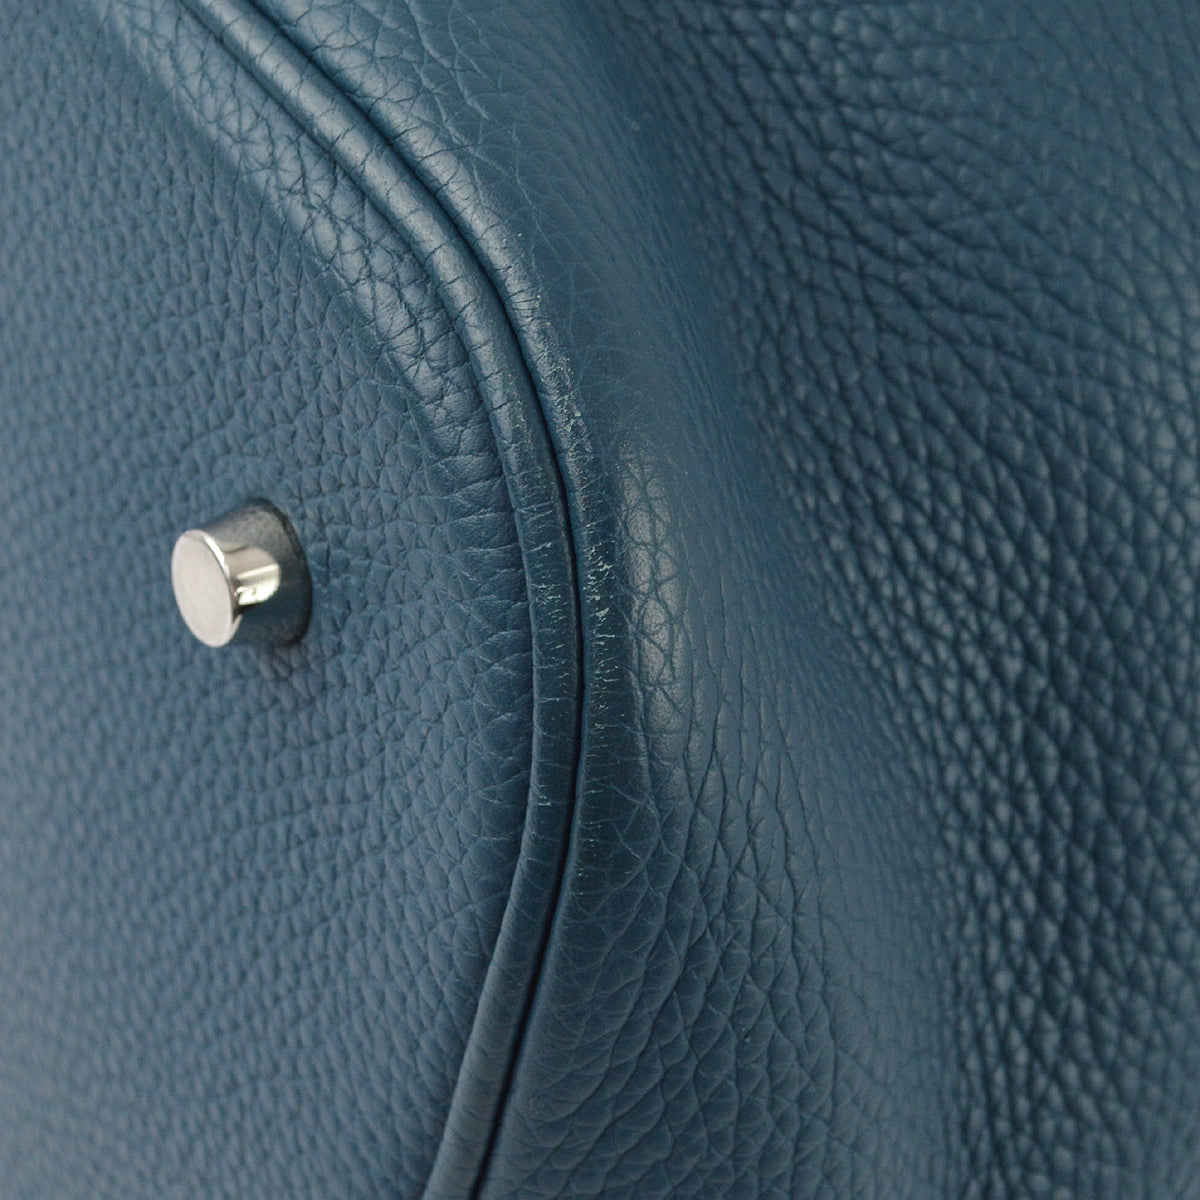 Hermes Blue Taurillon Clemence Picotin Lock TGM Handbag